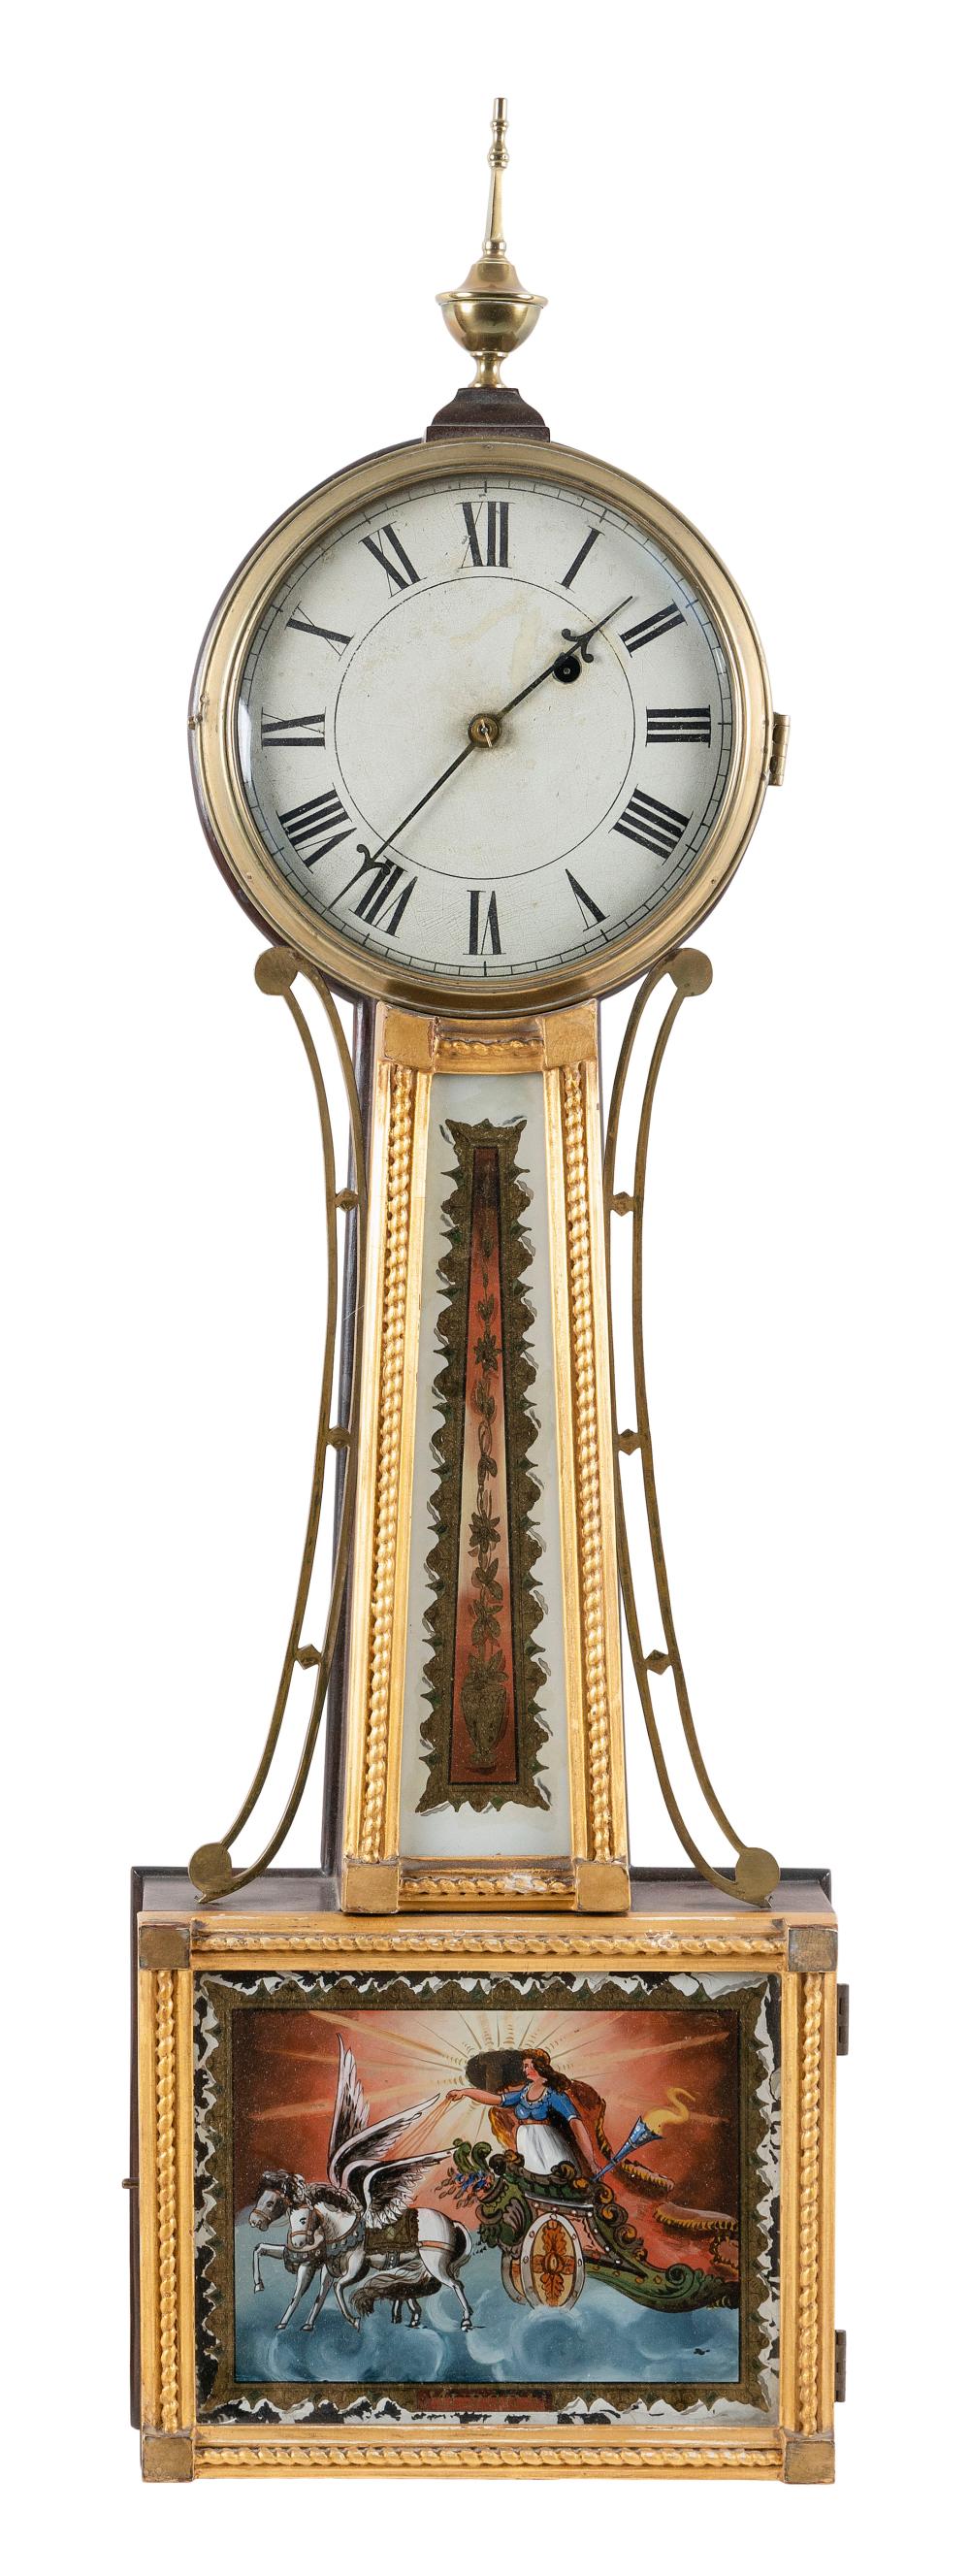 BANJO CLOCK CIRCA 1820-30 HEIGHT